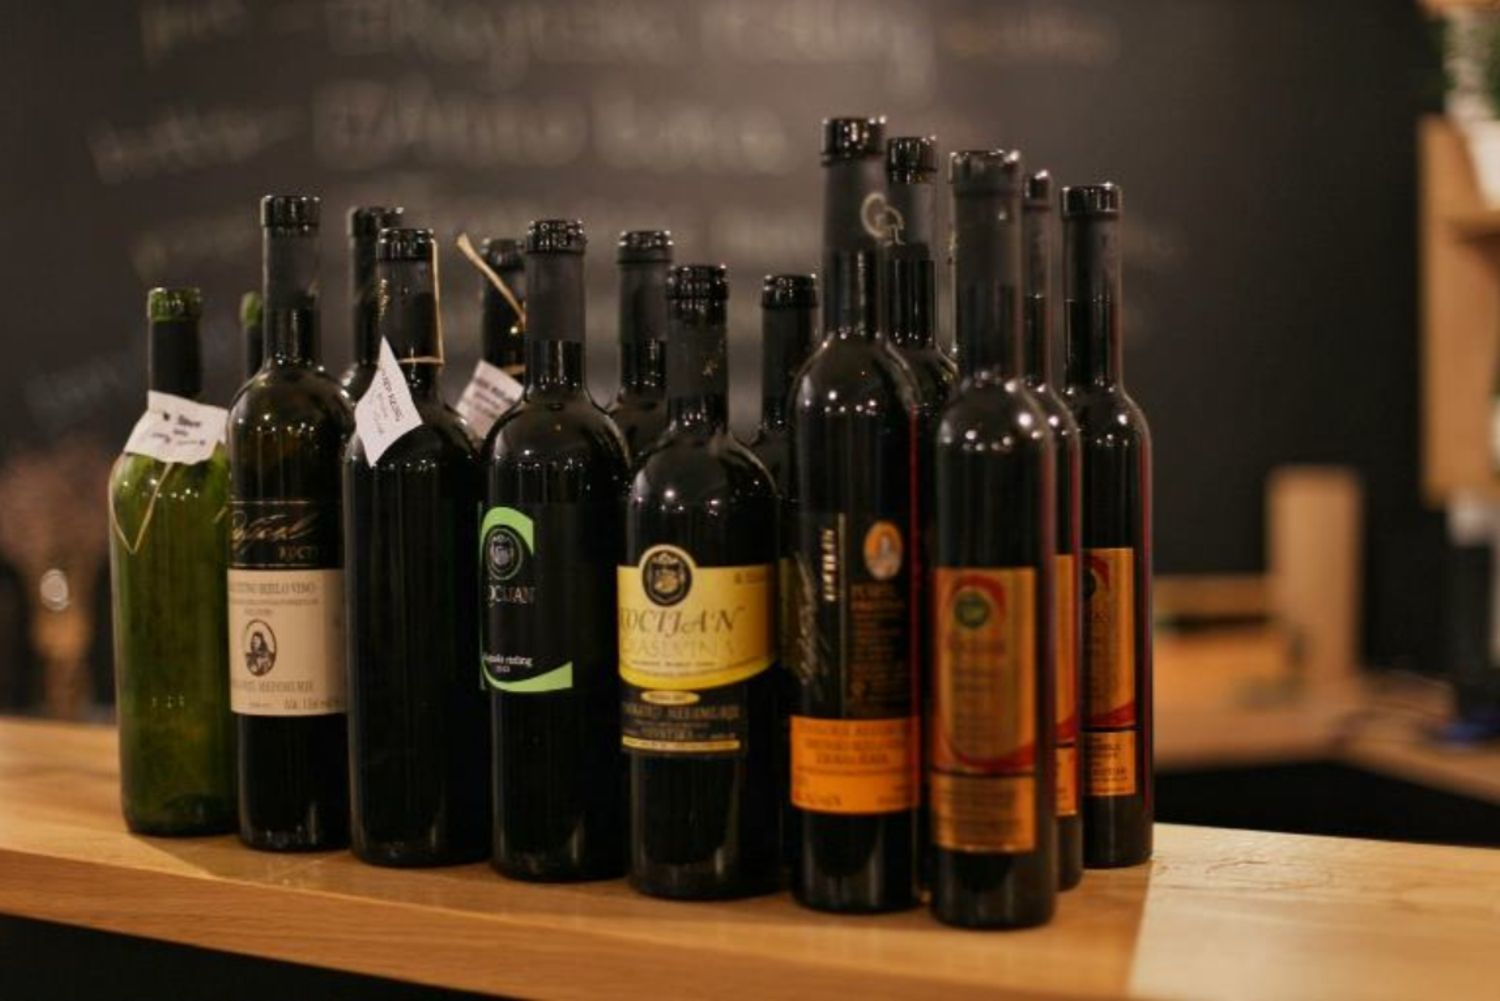 arhivska međimurska vina vinarija kocijan